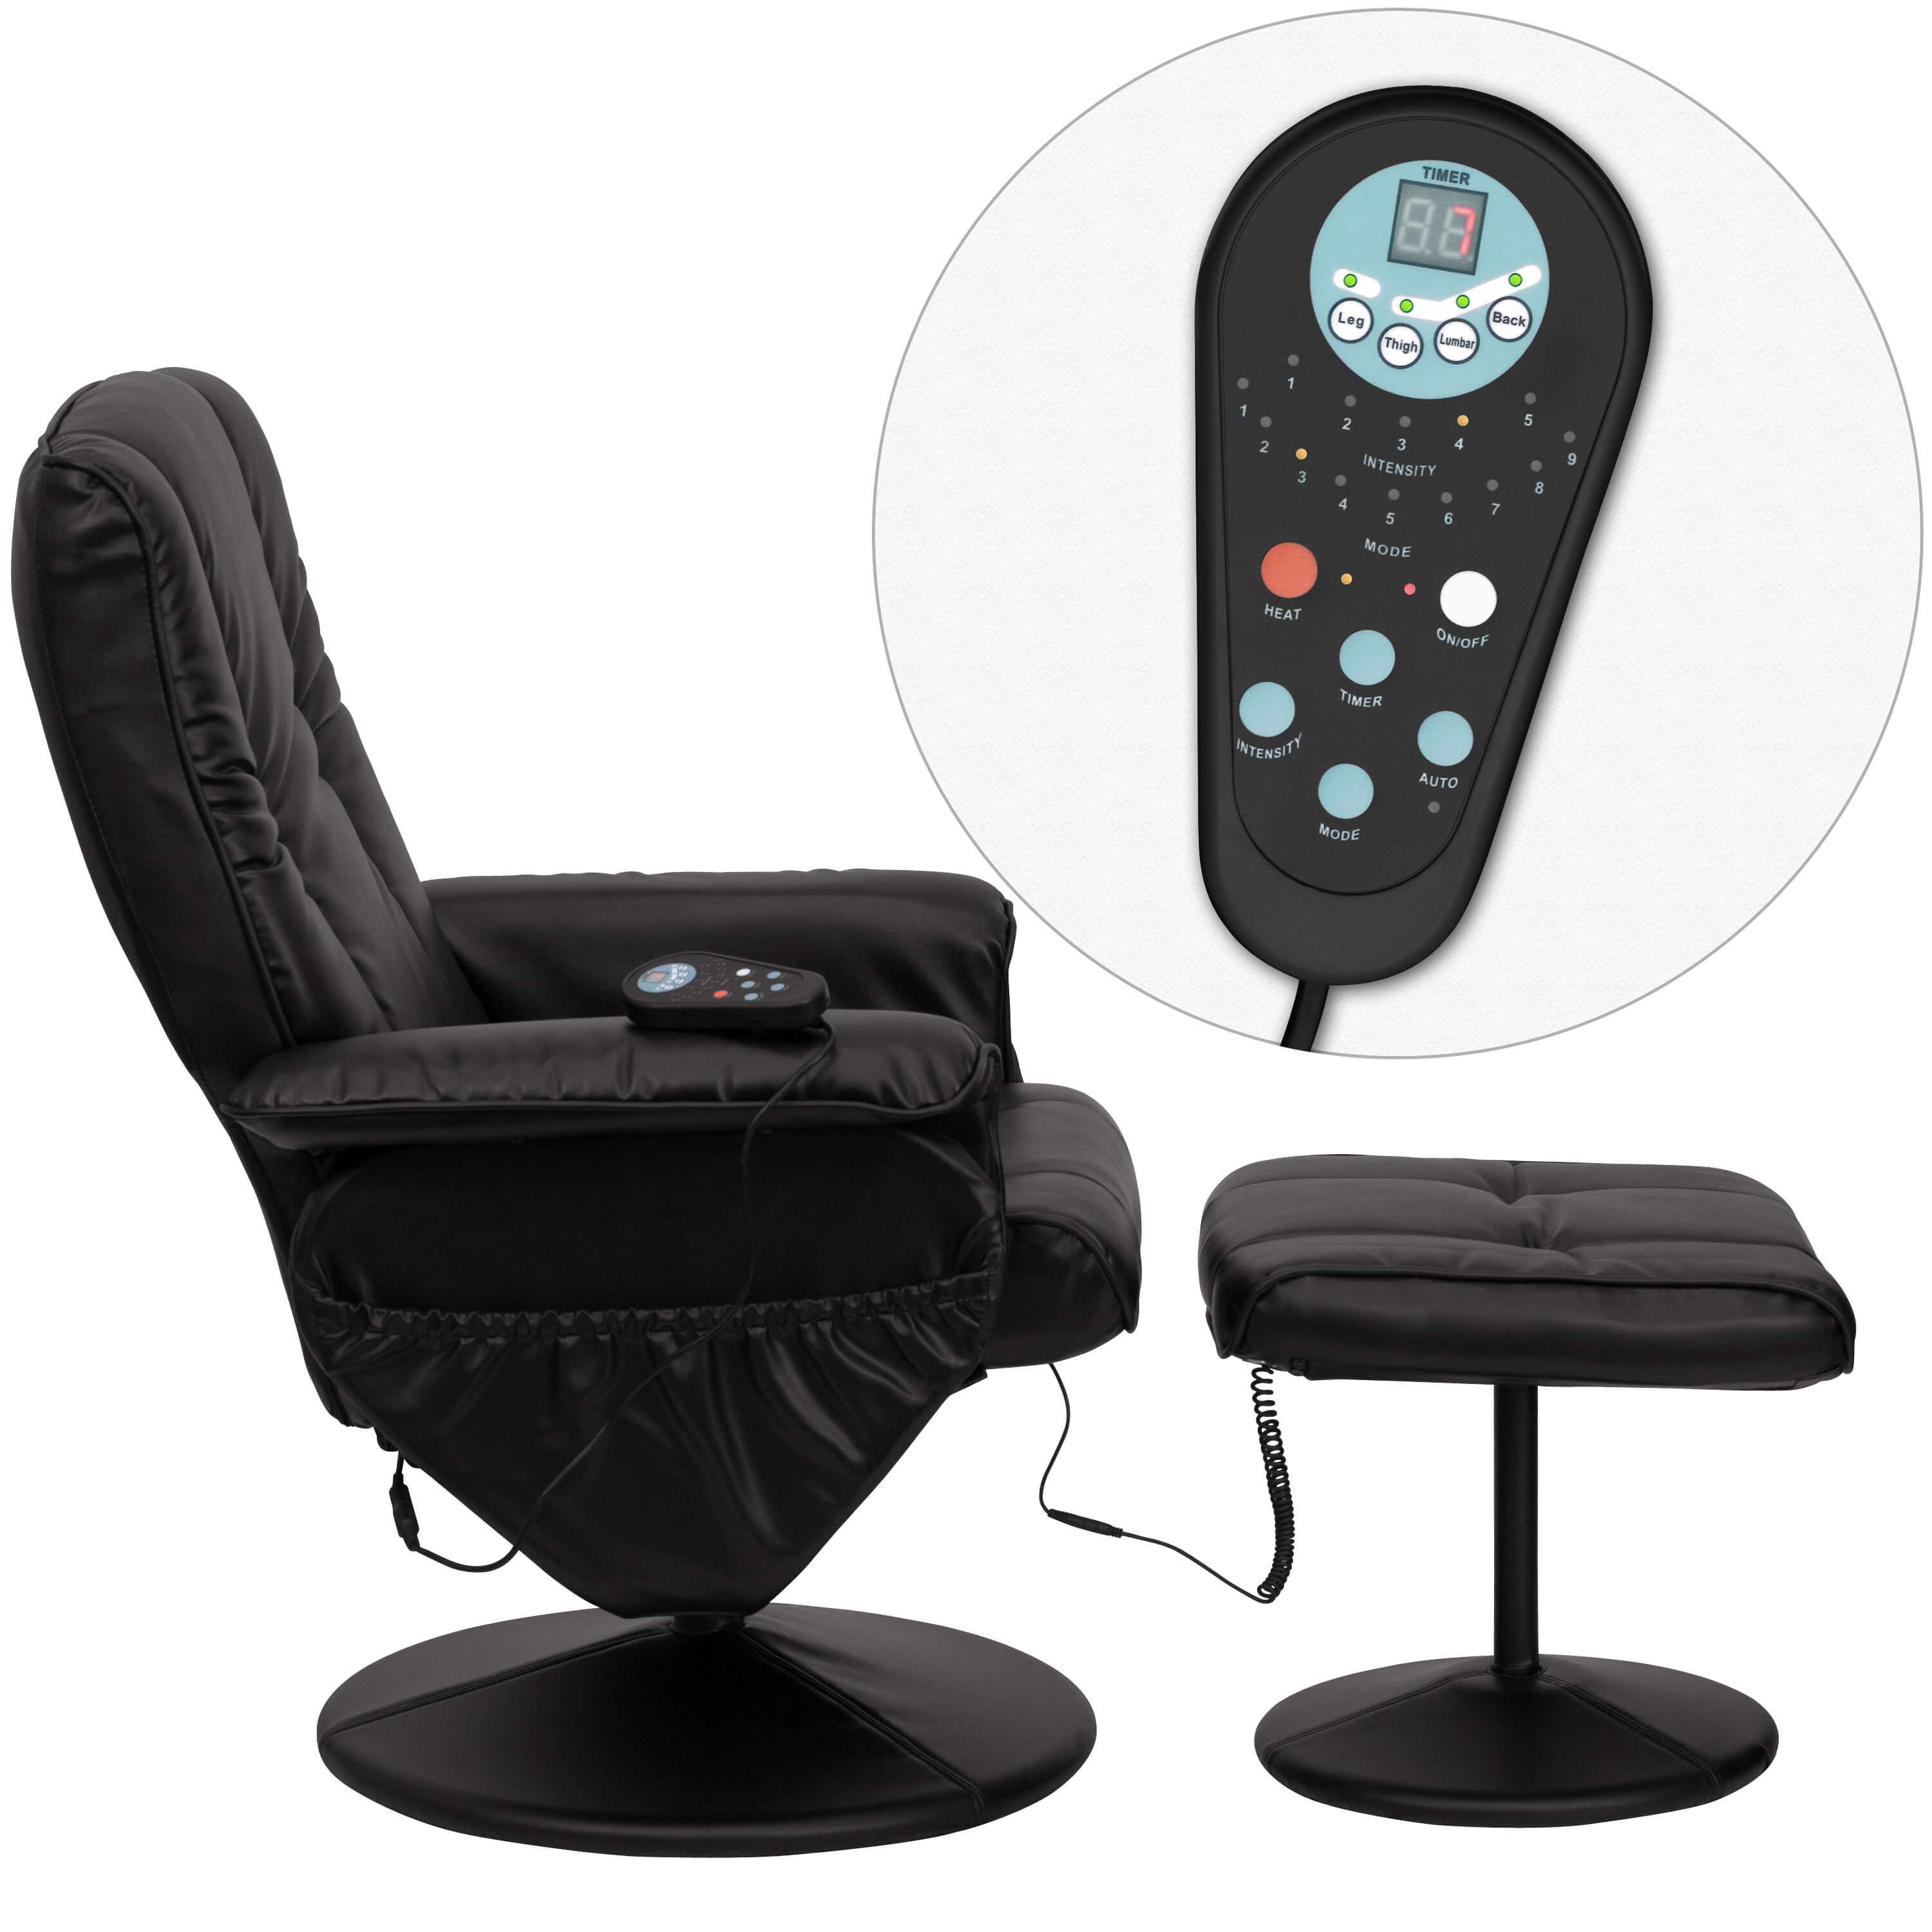 Recliner massage chair remote view